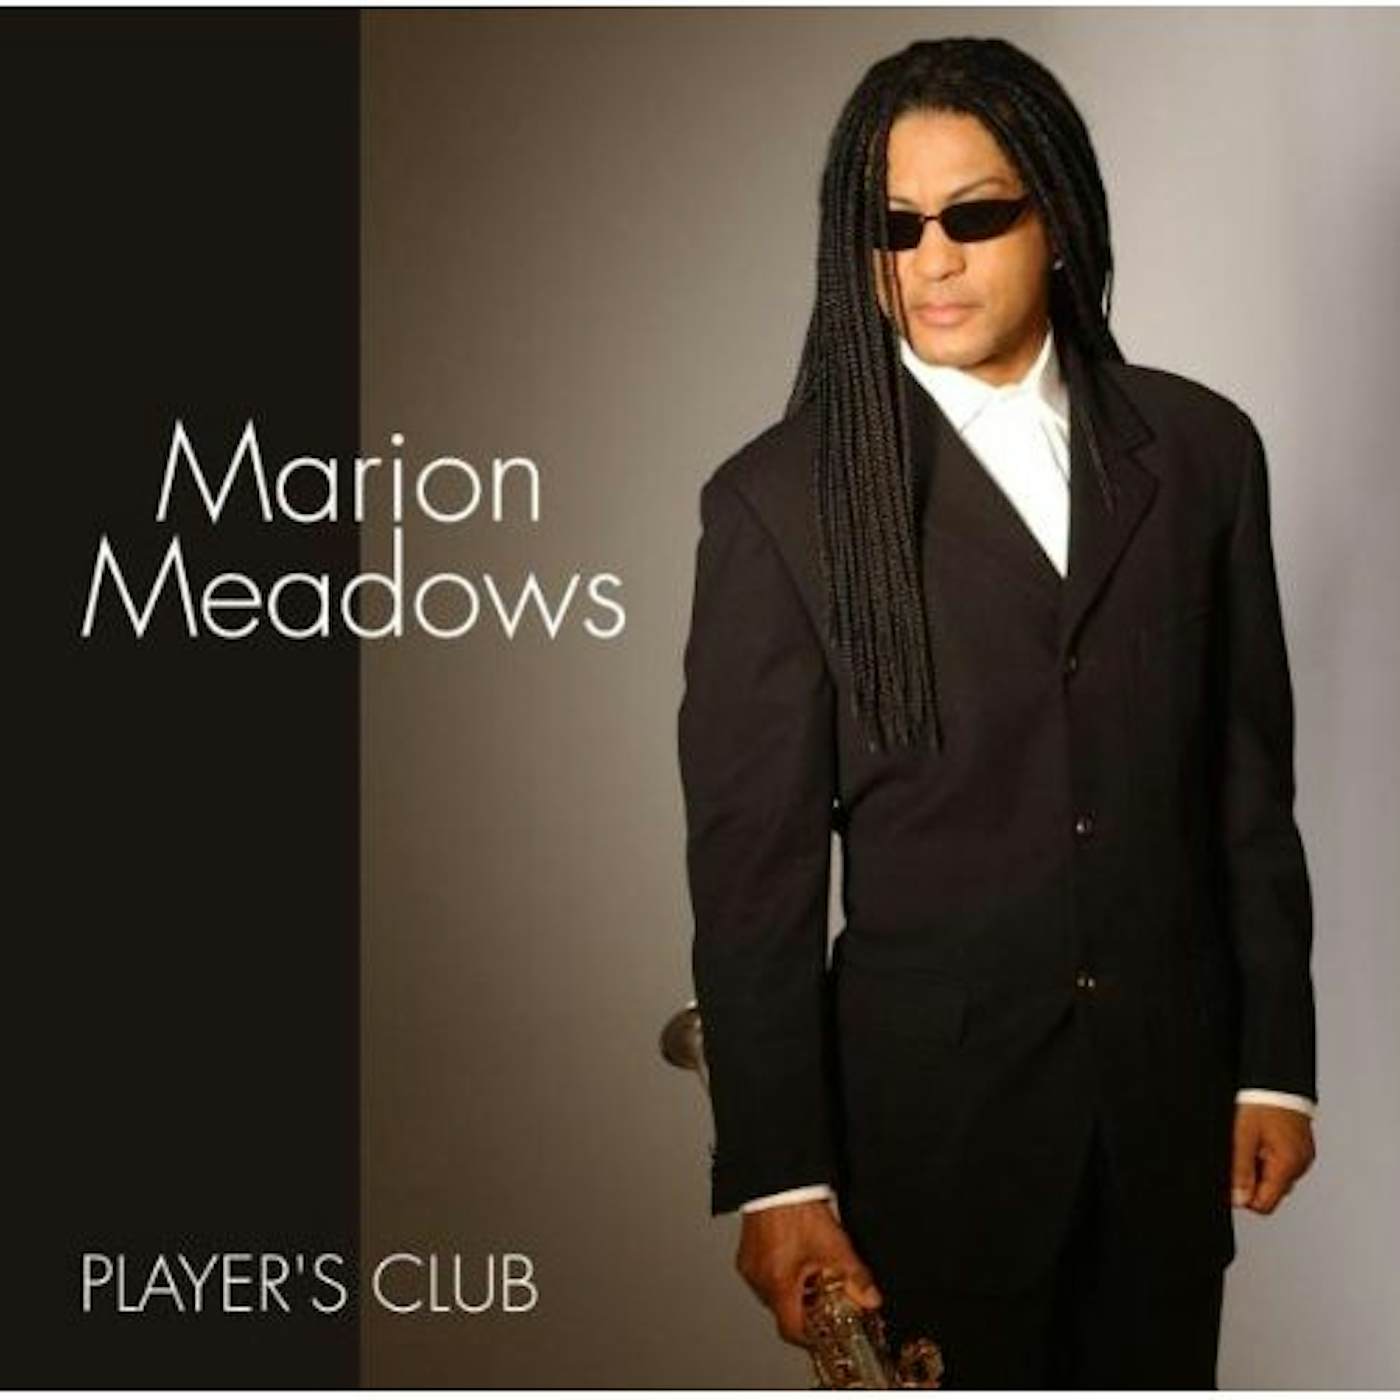 TWICE AS NICE – DIGITAL ALBUM DOWNLOAD – Marion Meadows Online Store